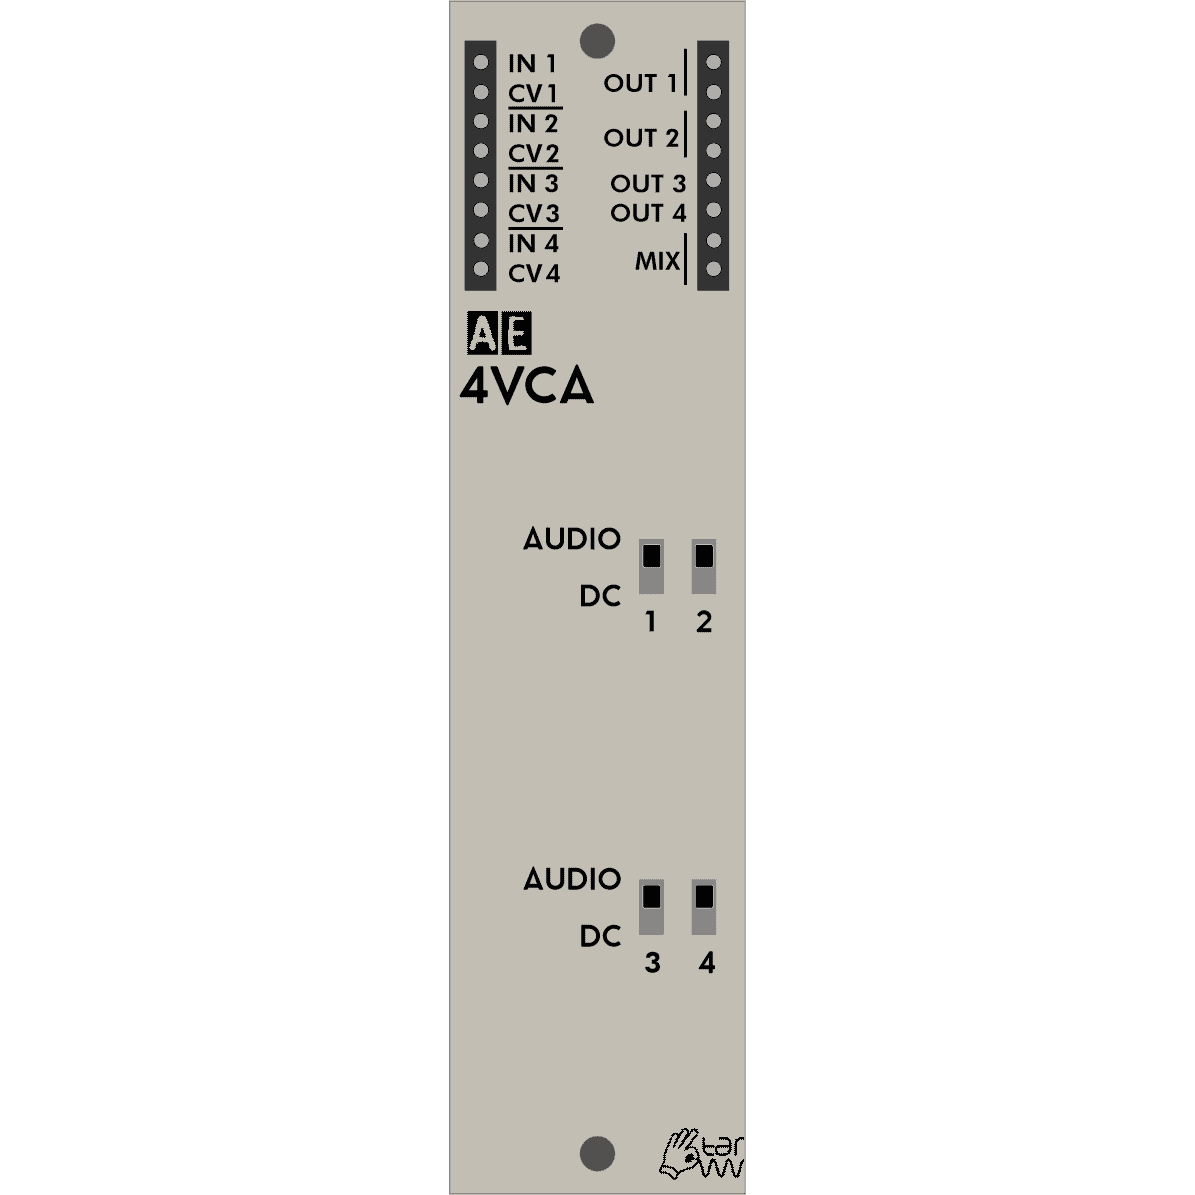 AE Modular New 4VCA Module